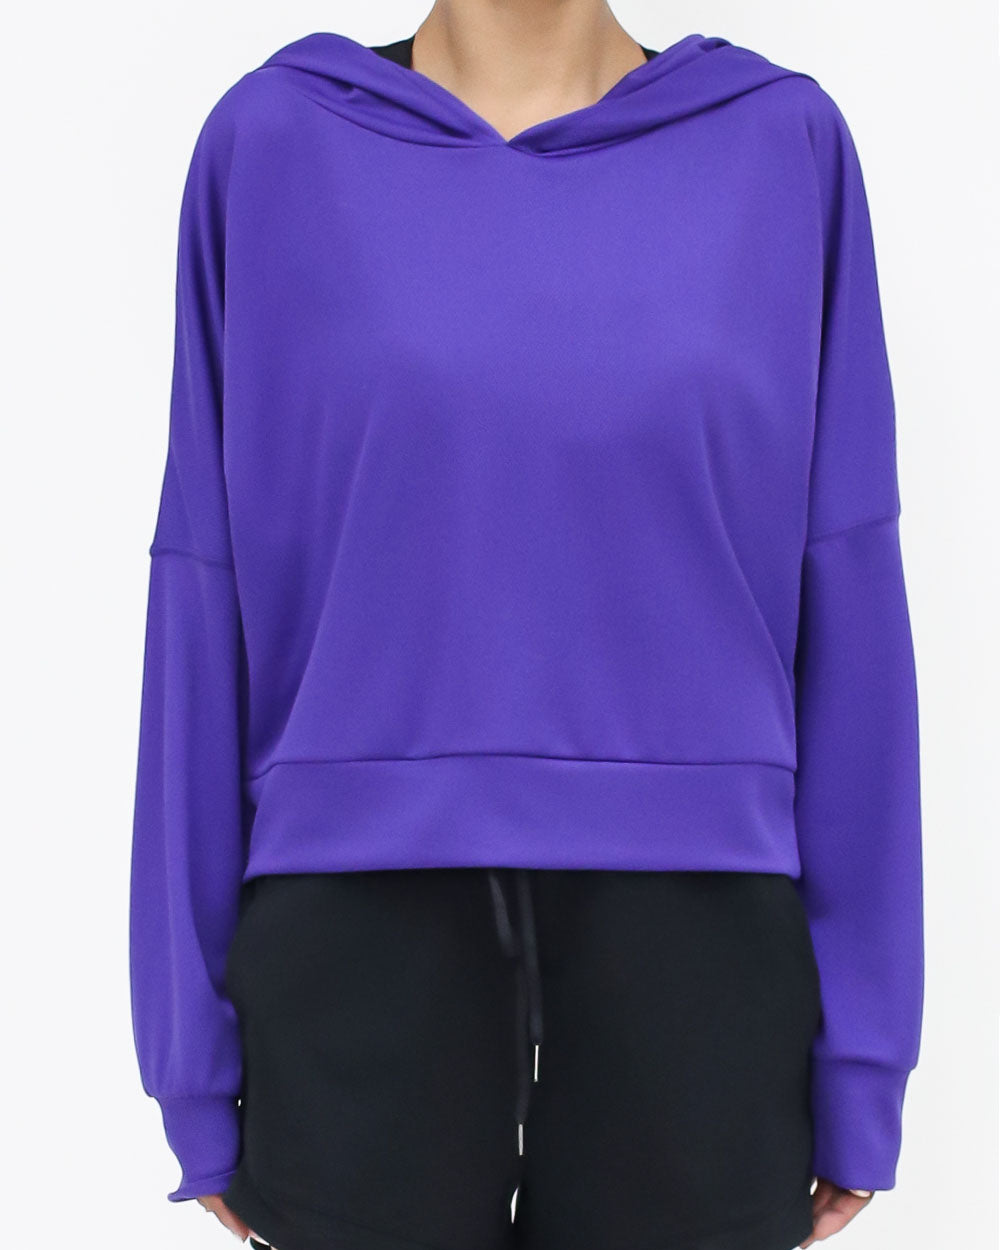 purple cutout back hoodie sports top *pre-order*